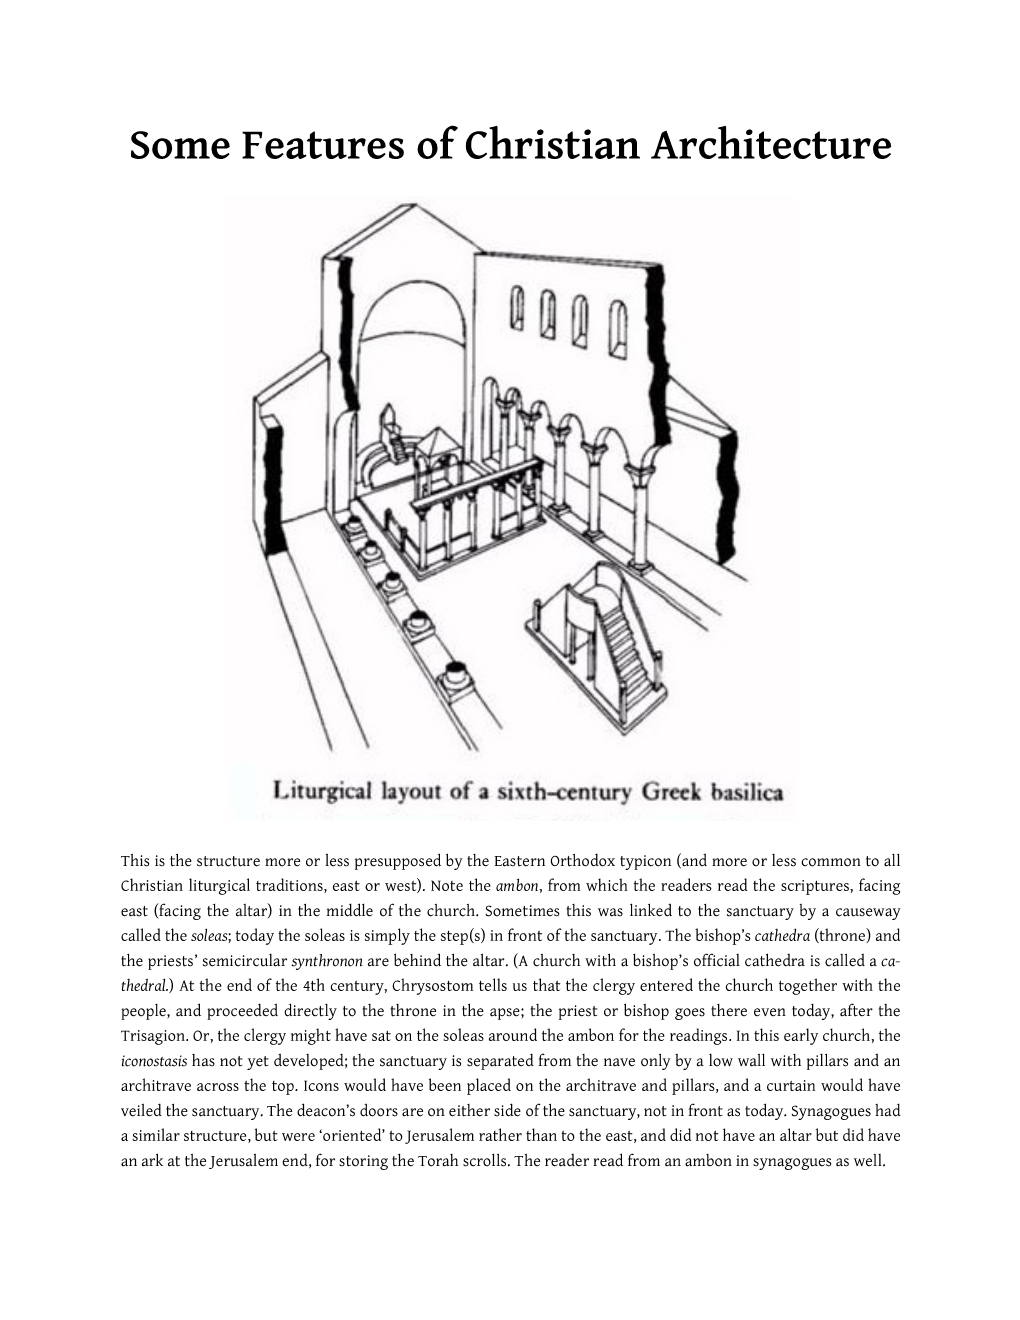 Liturgical Architecture Cutaway Views